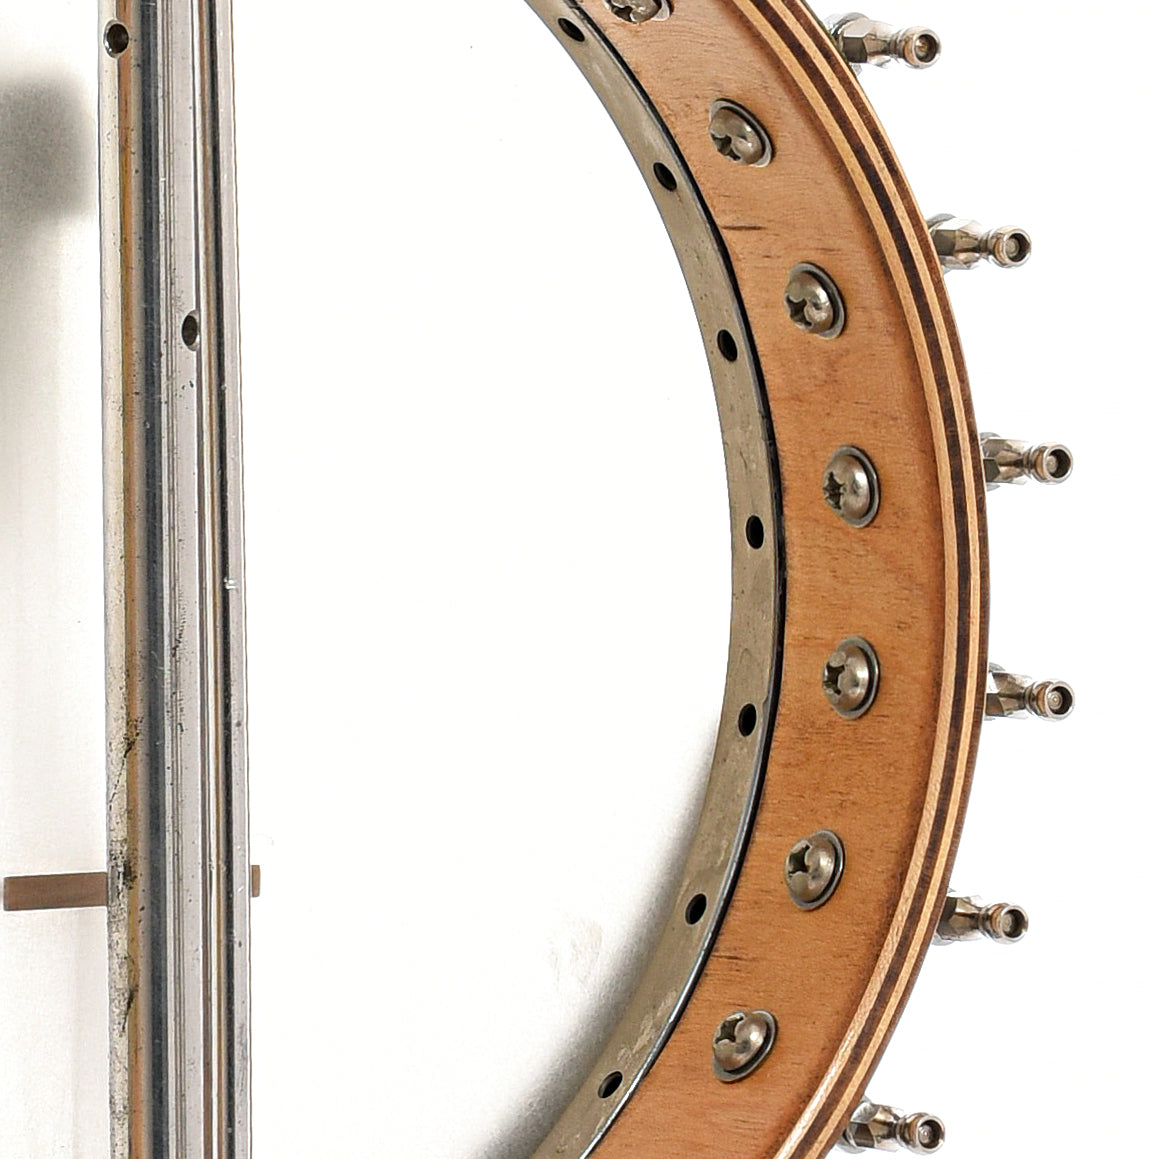 Inside rim of Vega Pete Seeger Extra Long Neck Banjo